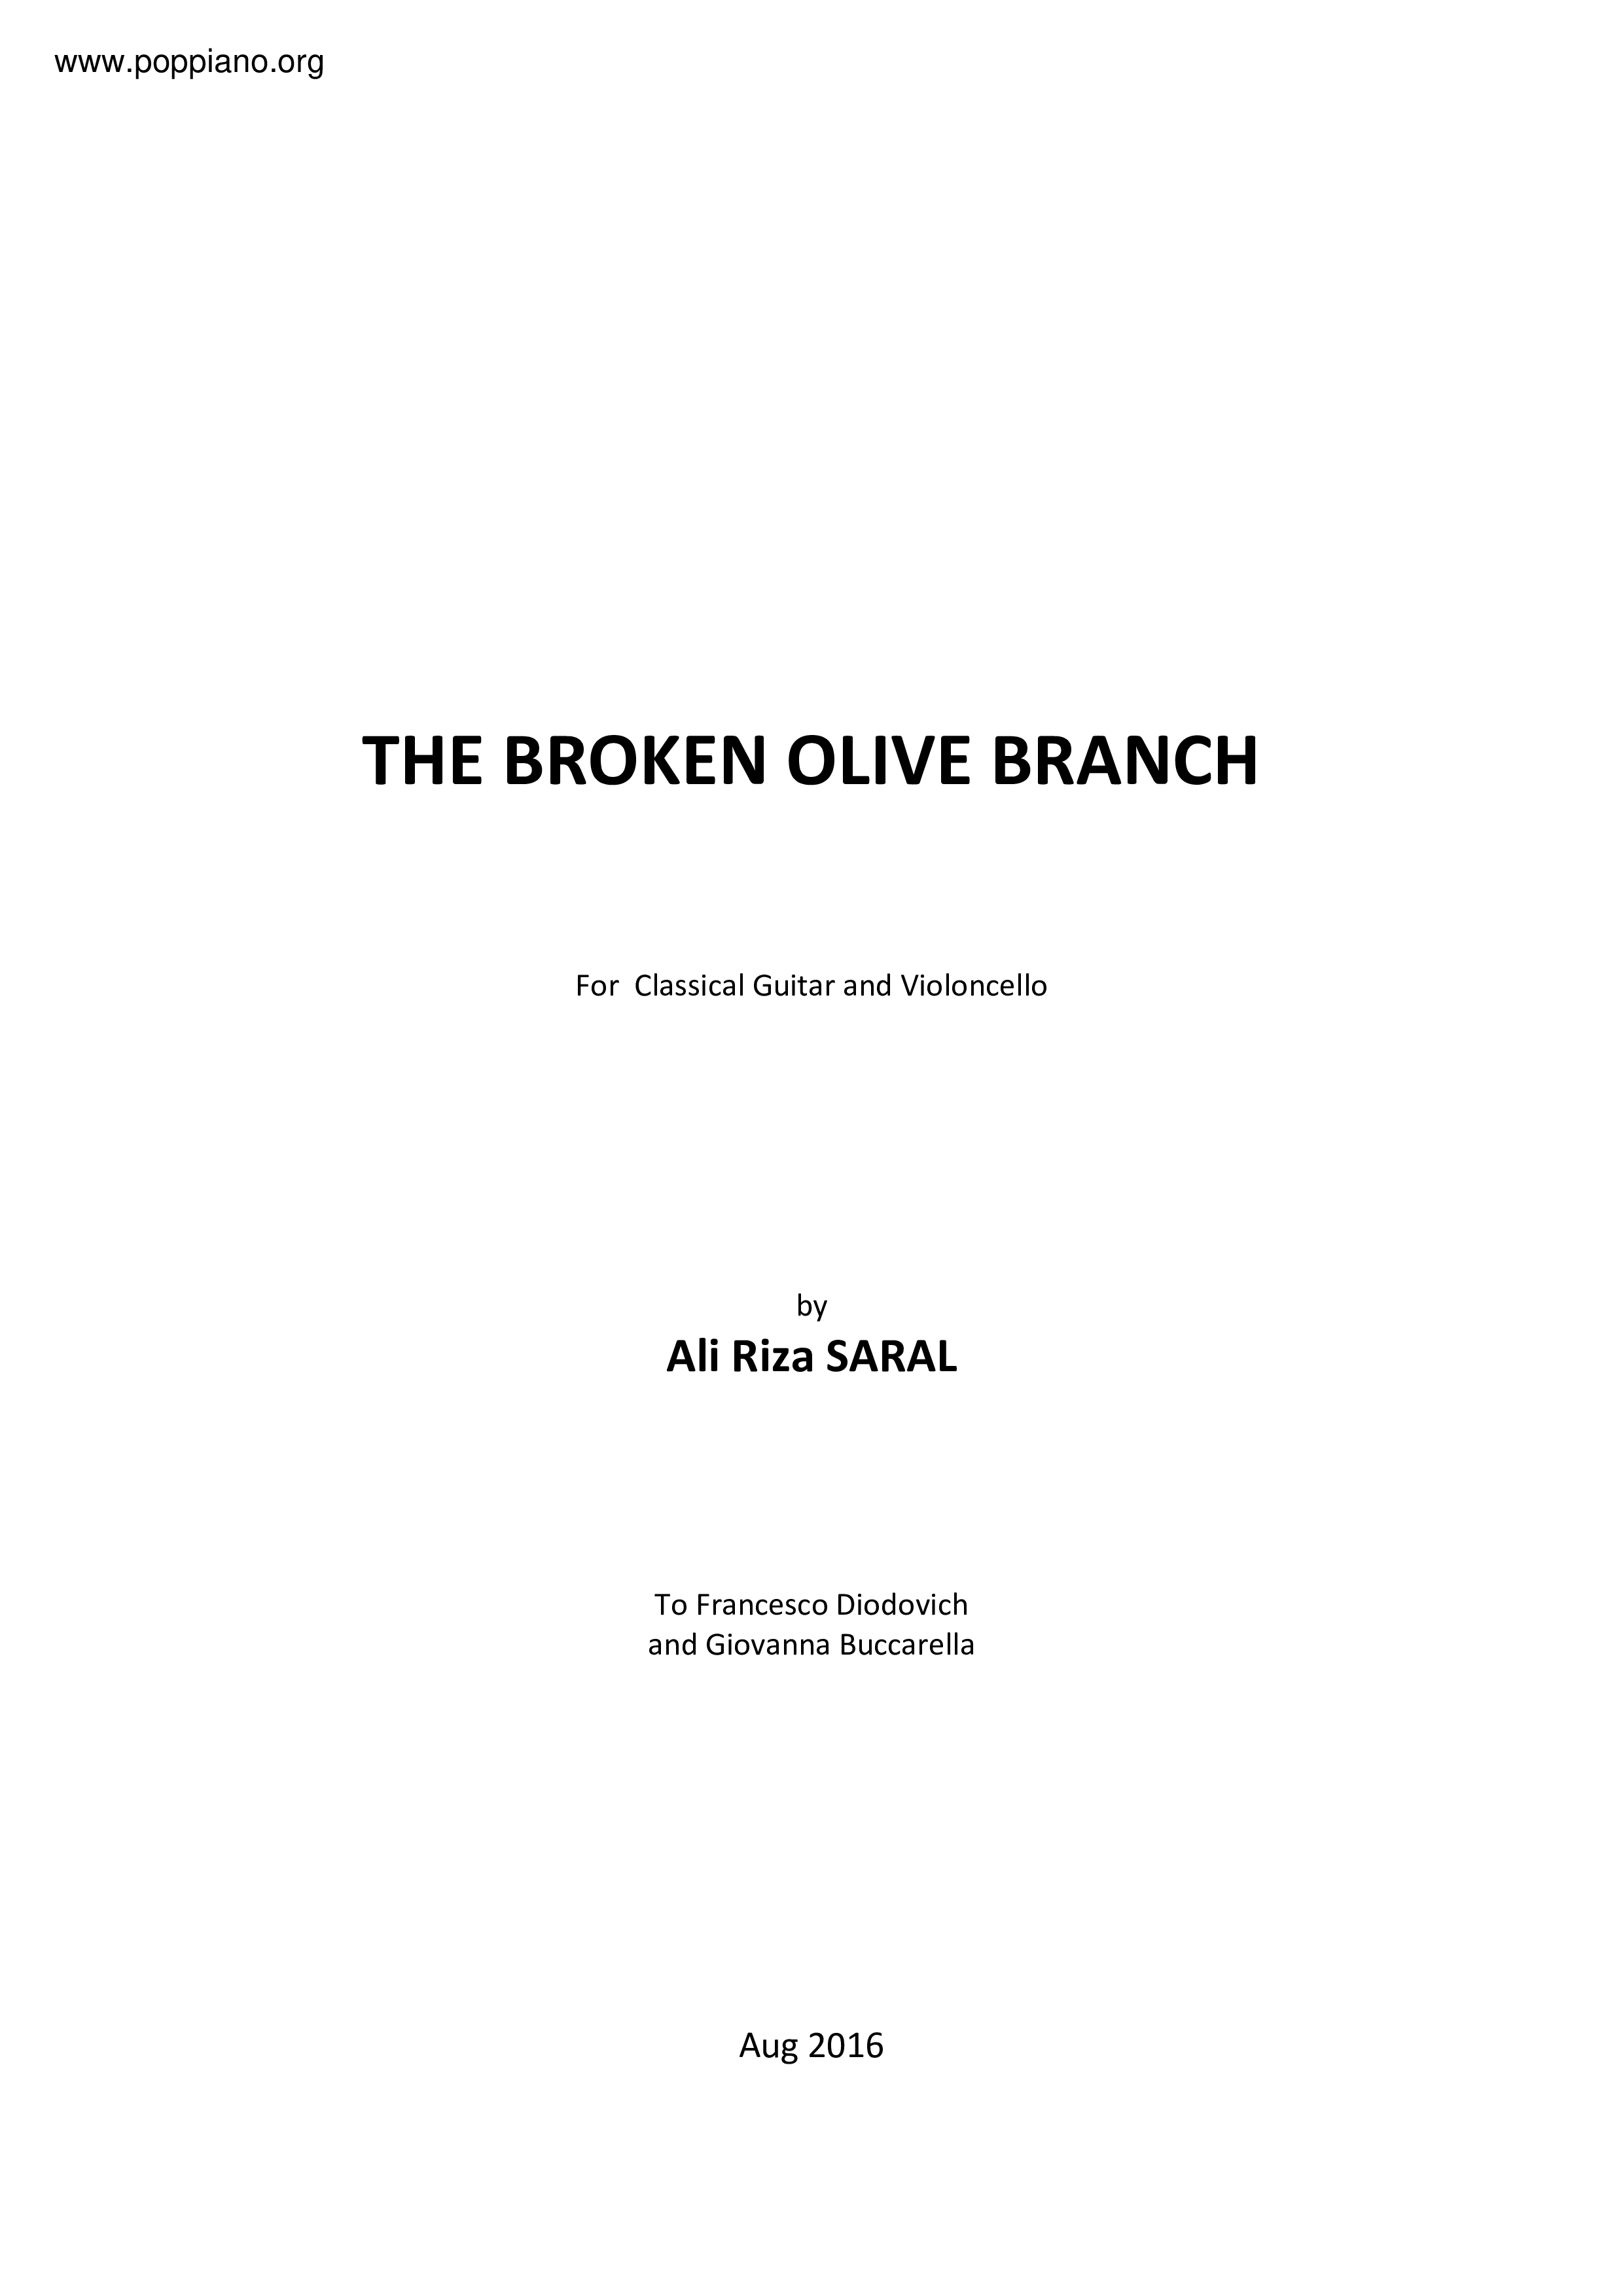 Broken Olive Branch Score